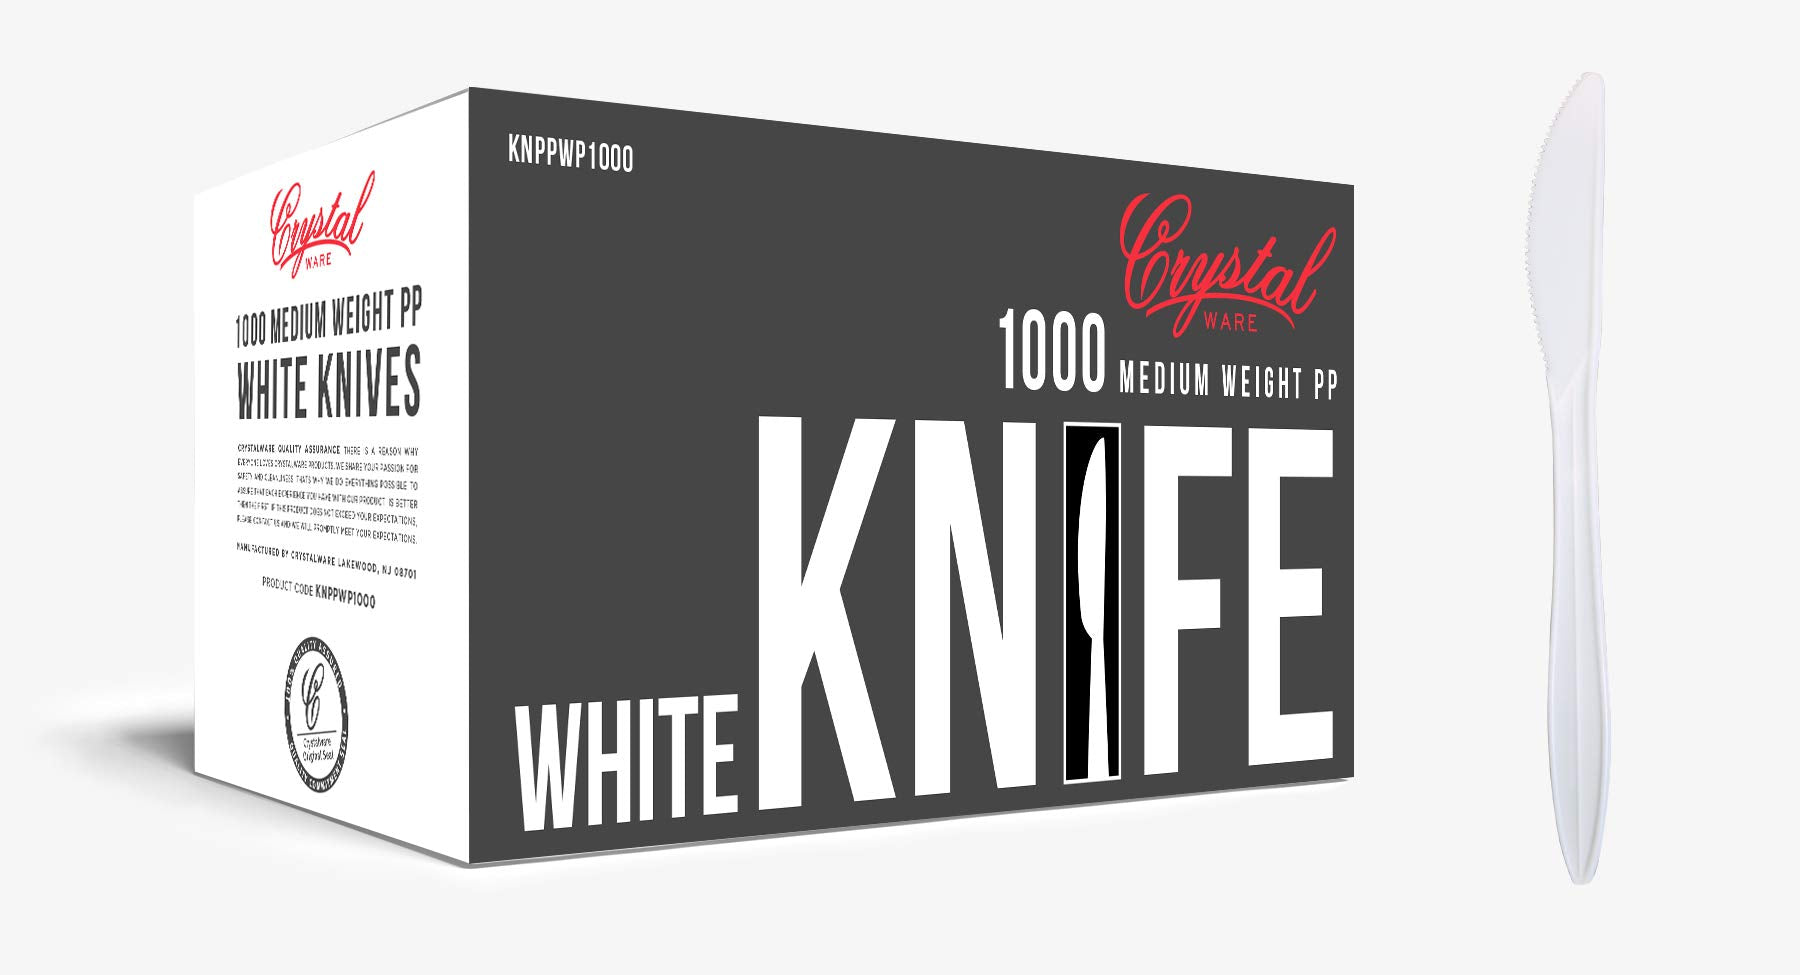 CrystalWare Medium Weight Plastic Knives 1000/Case